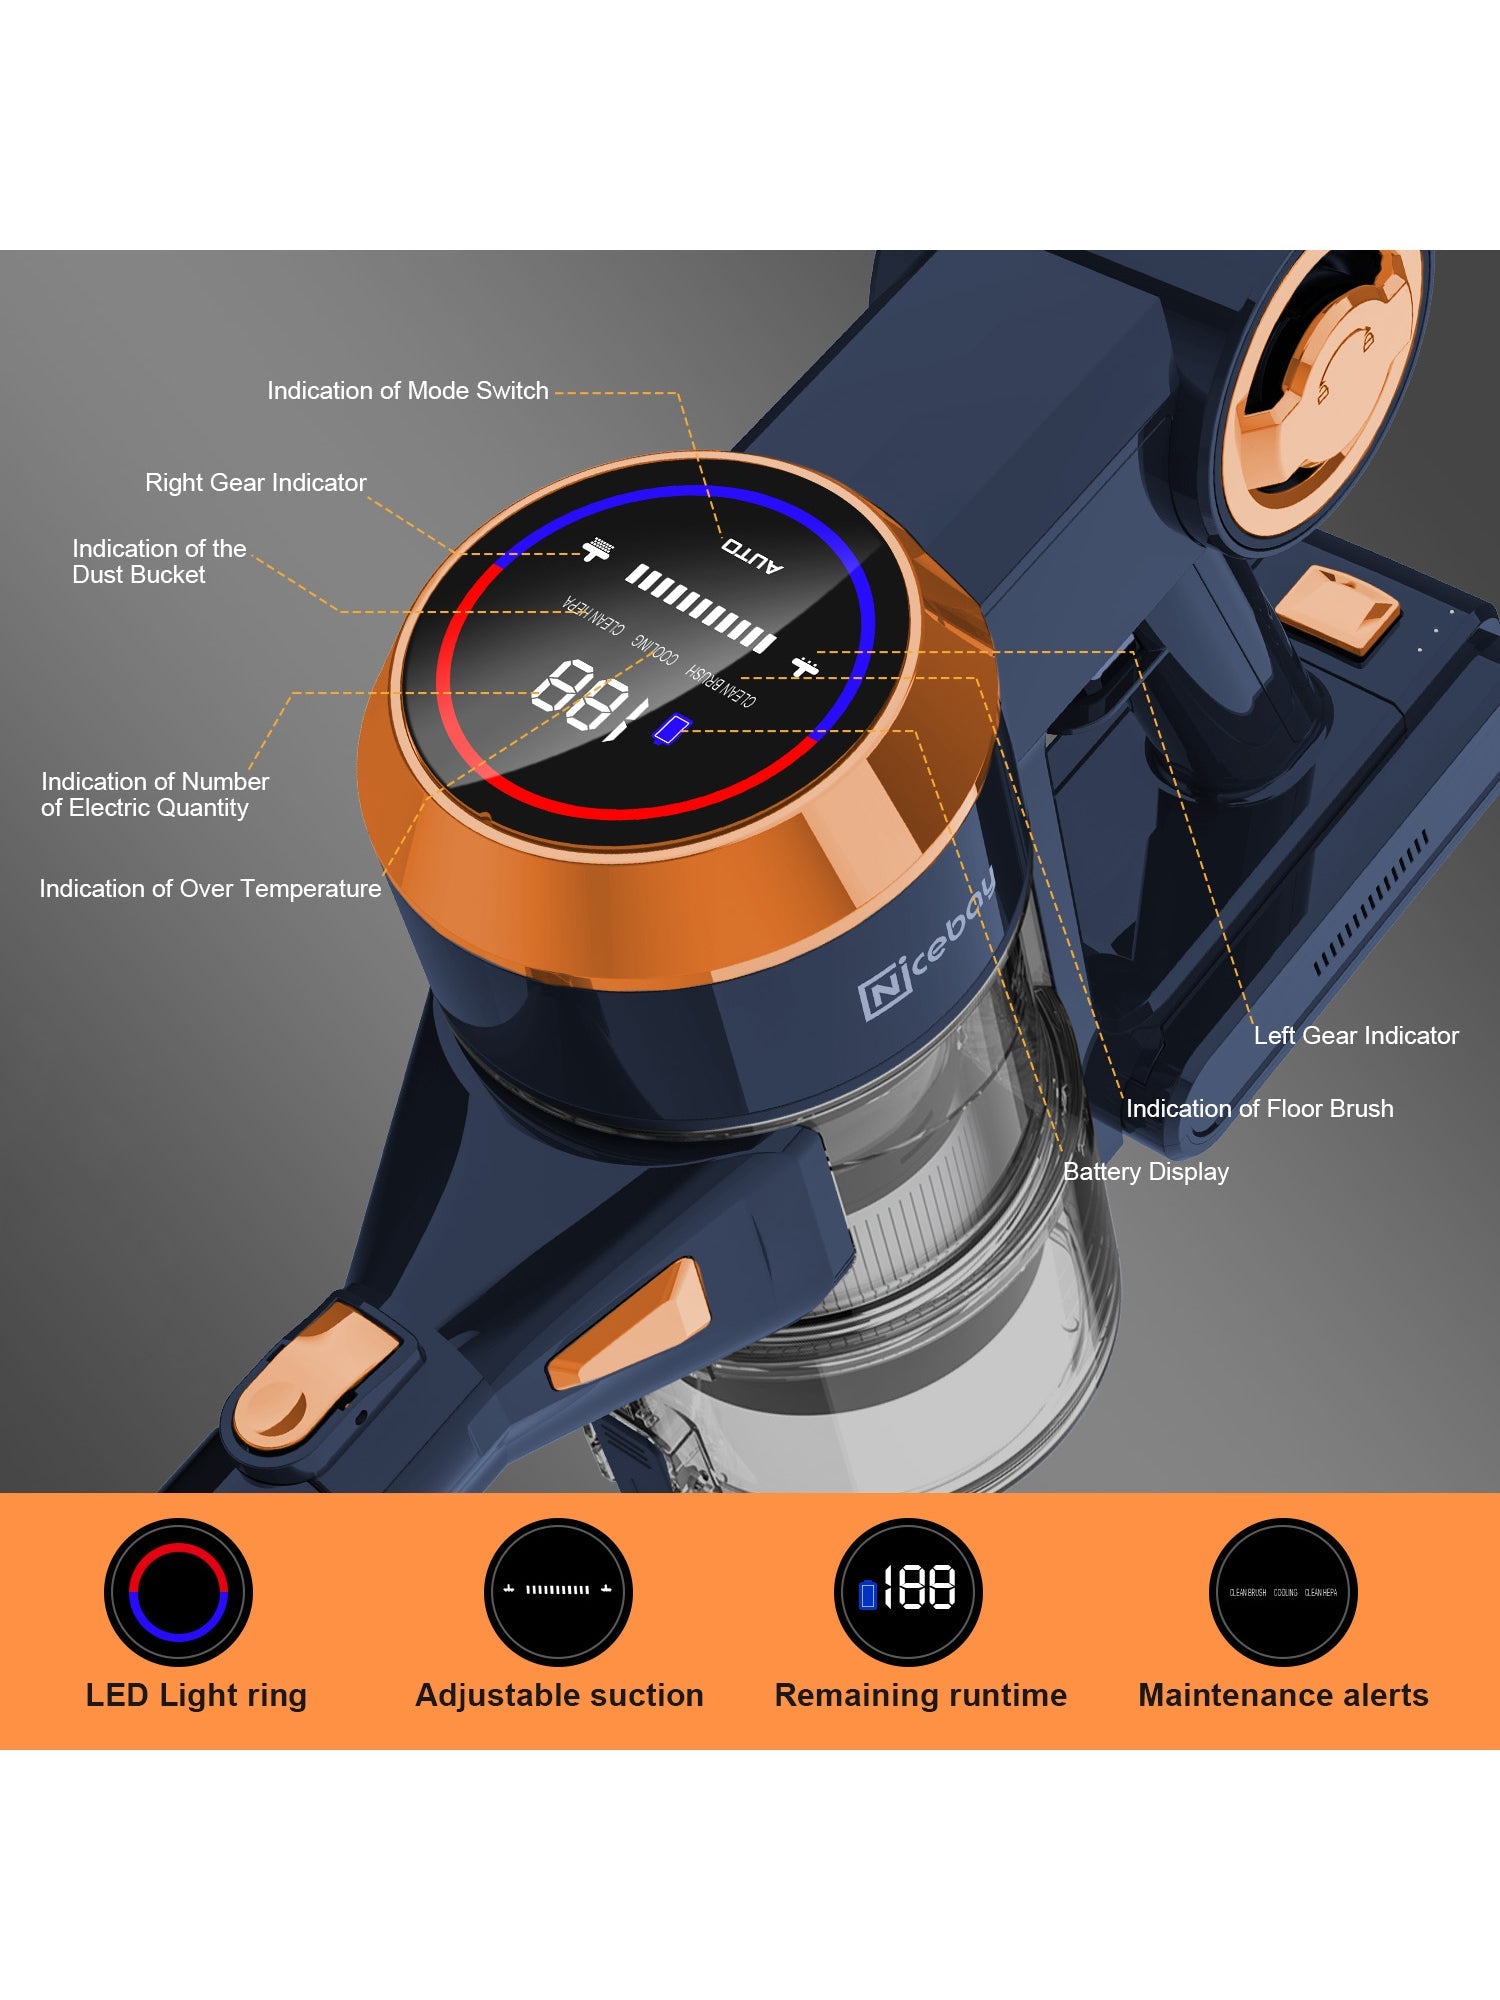 Nicebay 25Kpa Brushless Motor Stick Cordless Vacuum Cleaner with LED Smart Induction auto-adjustment  Blue and Orange Color